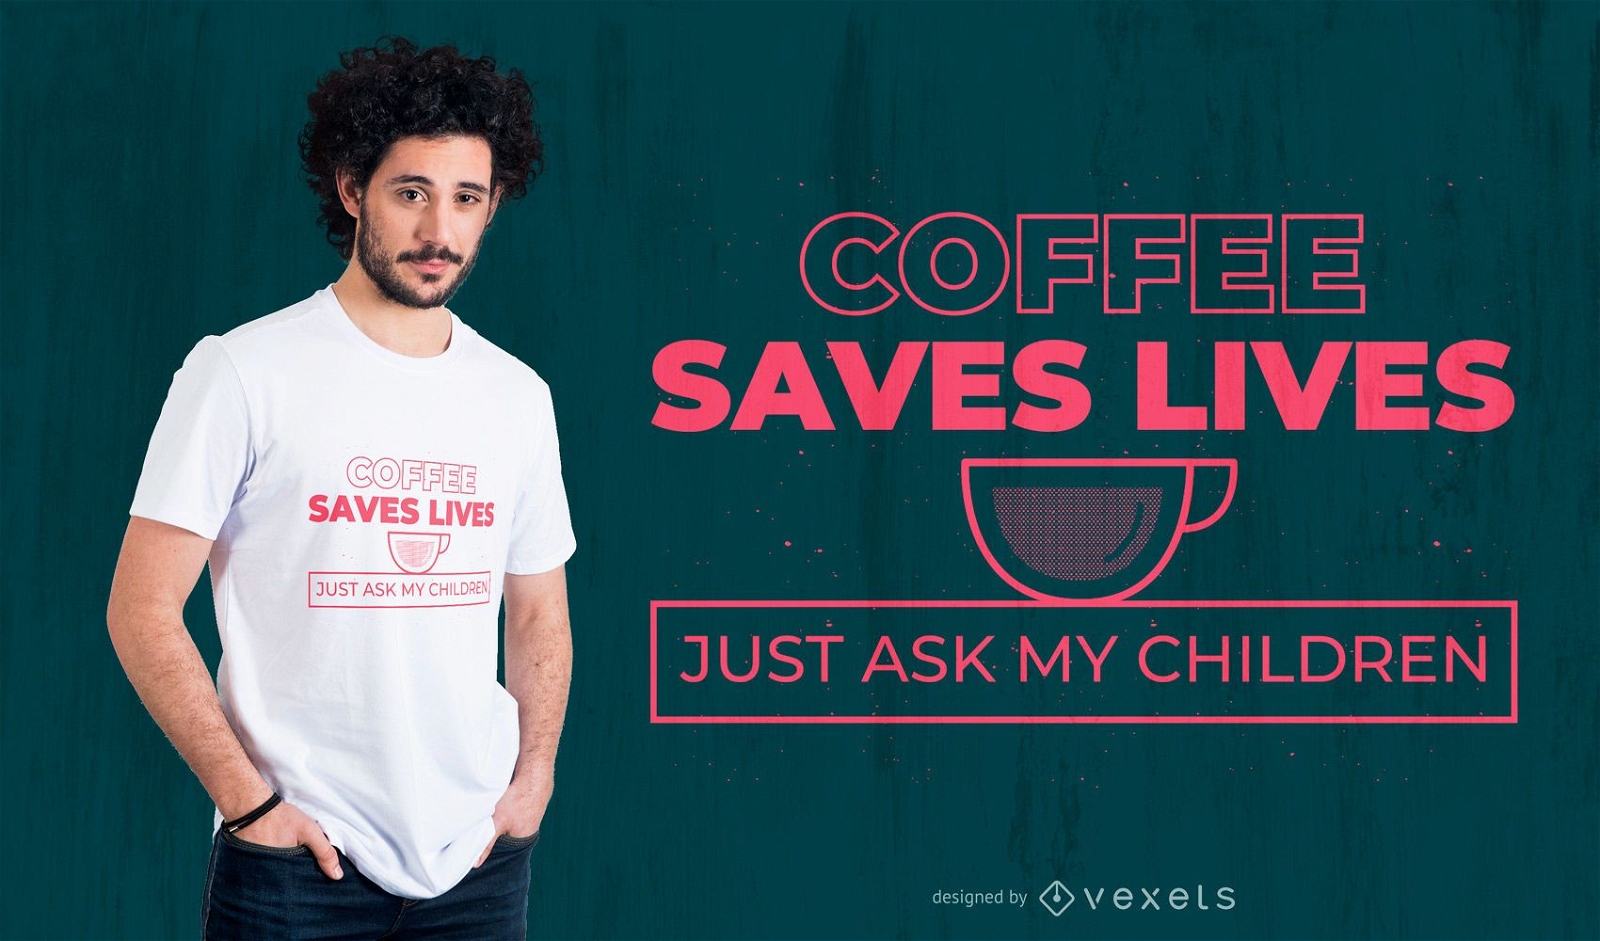 Coffee saves lives t-shirt design